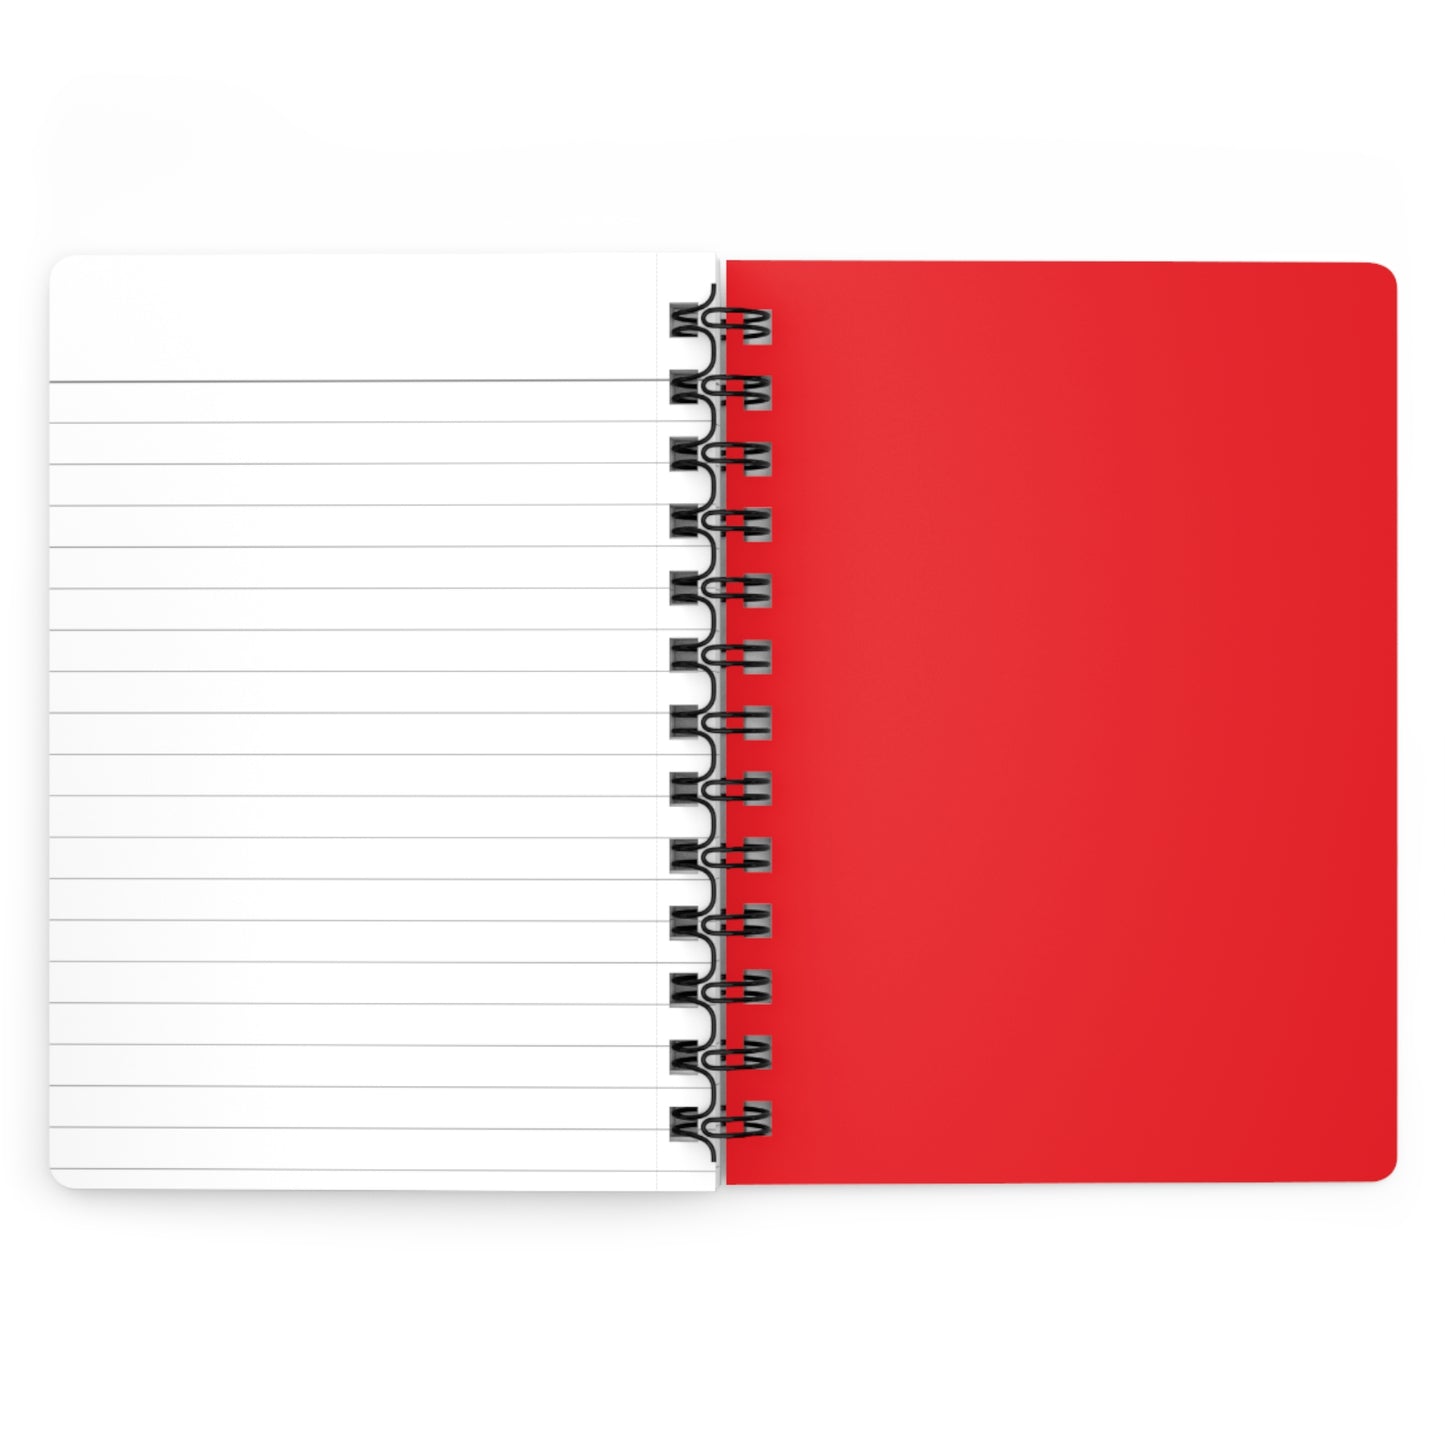 Heart - Spiral Bound Journal -Red Note pad